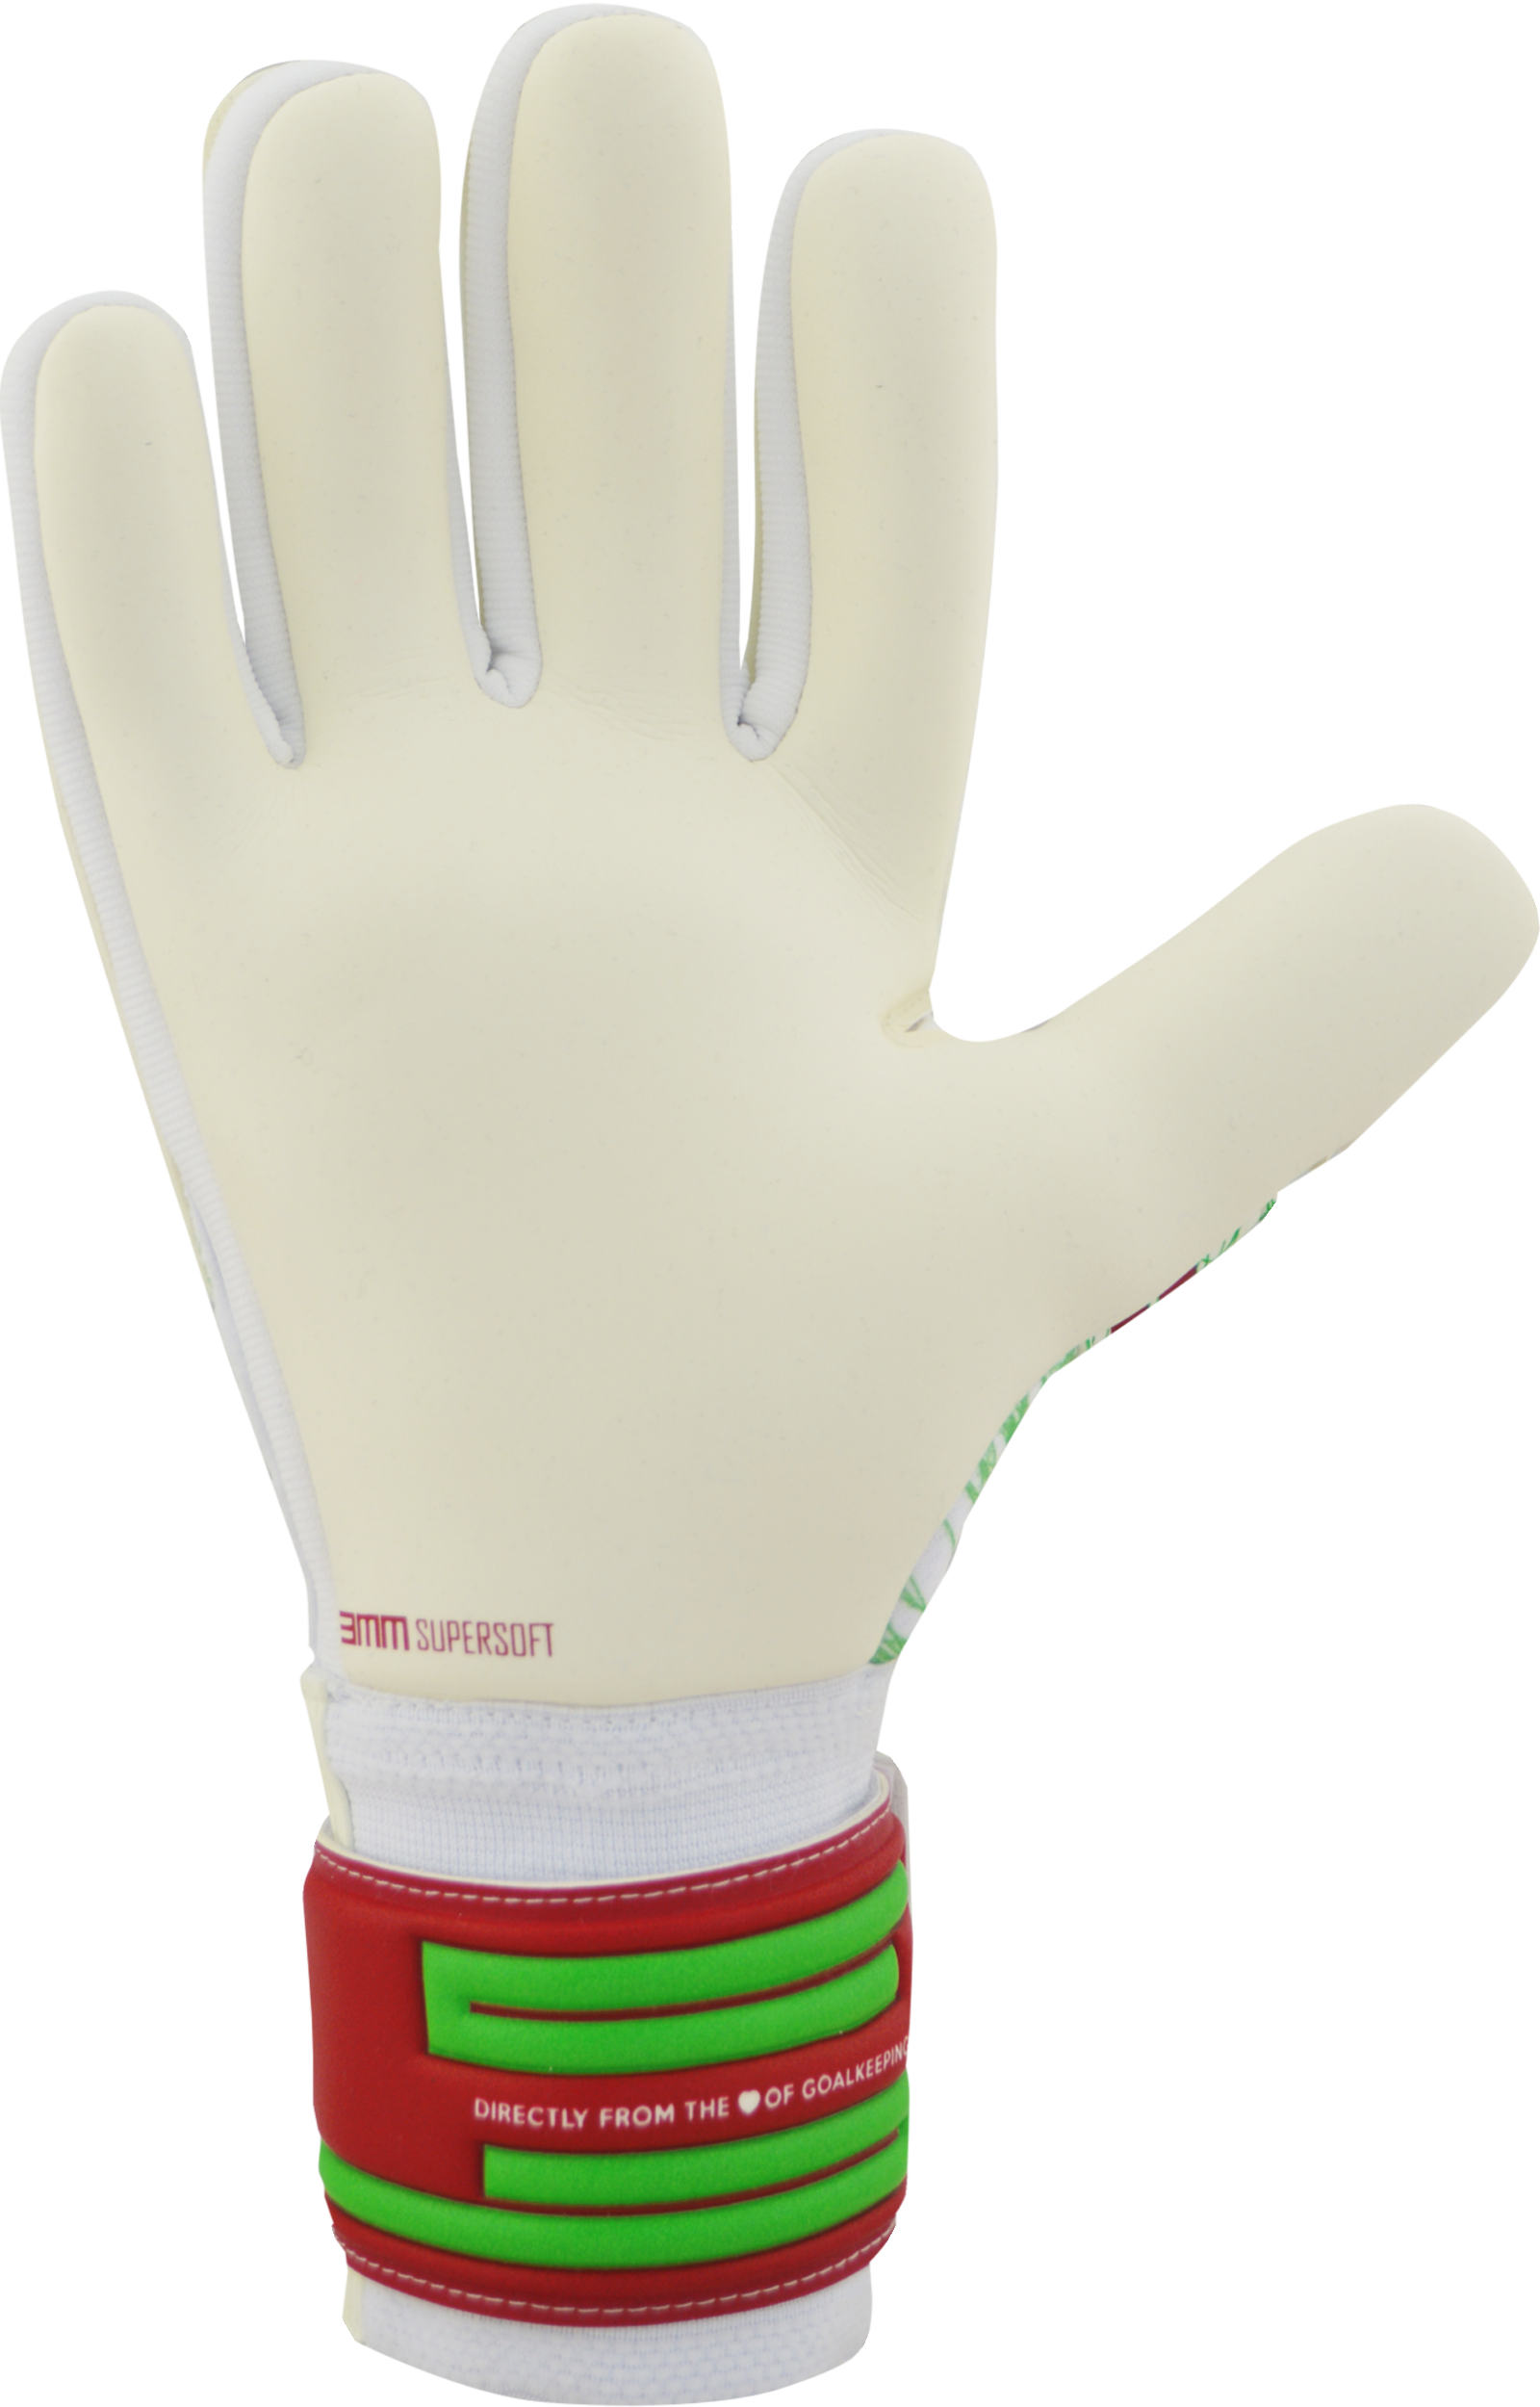 KEEPERsport Varan6 Premier NC 5FS Handschuh F011 